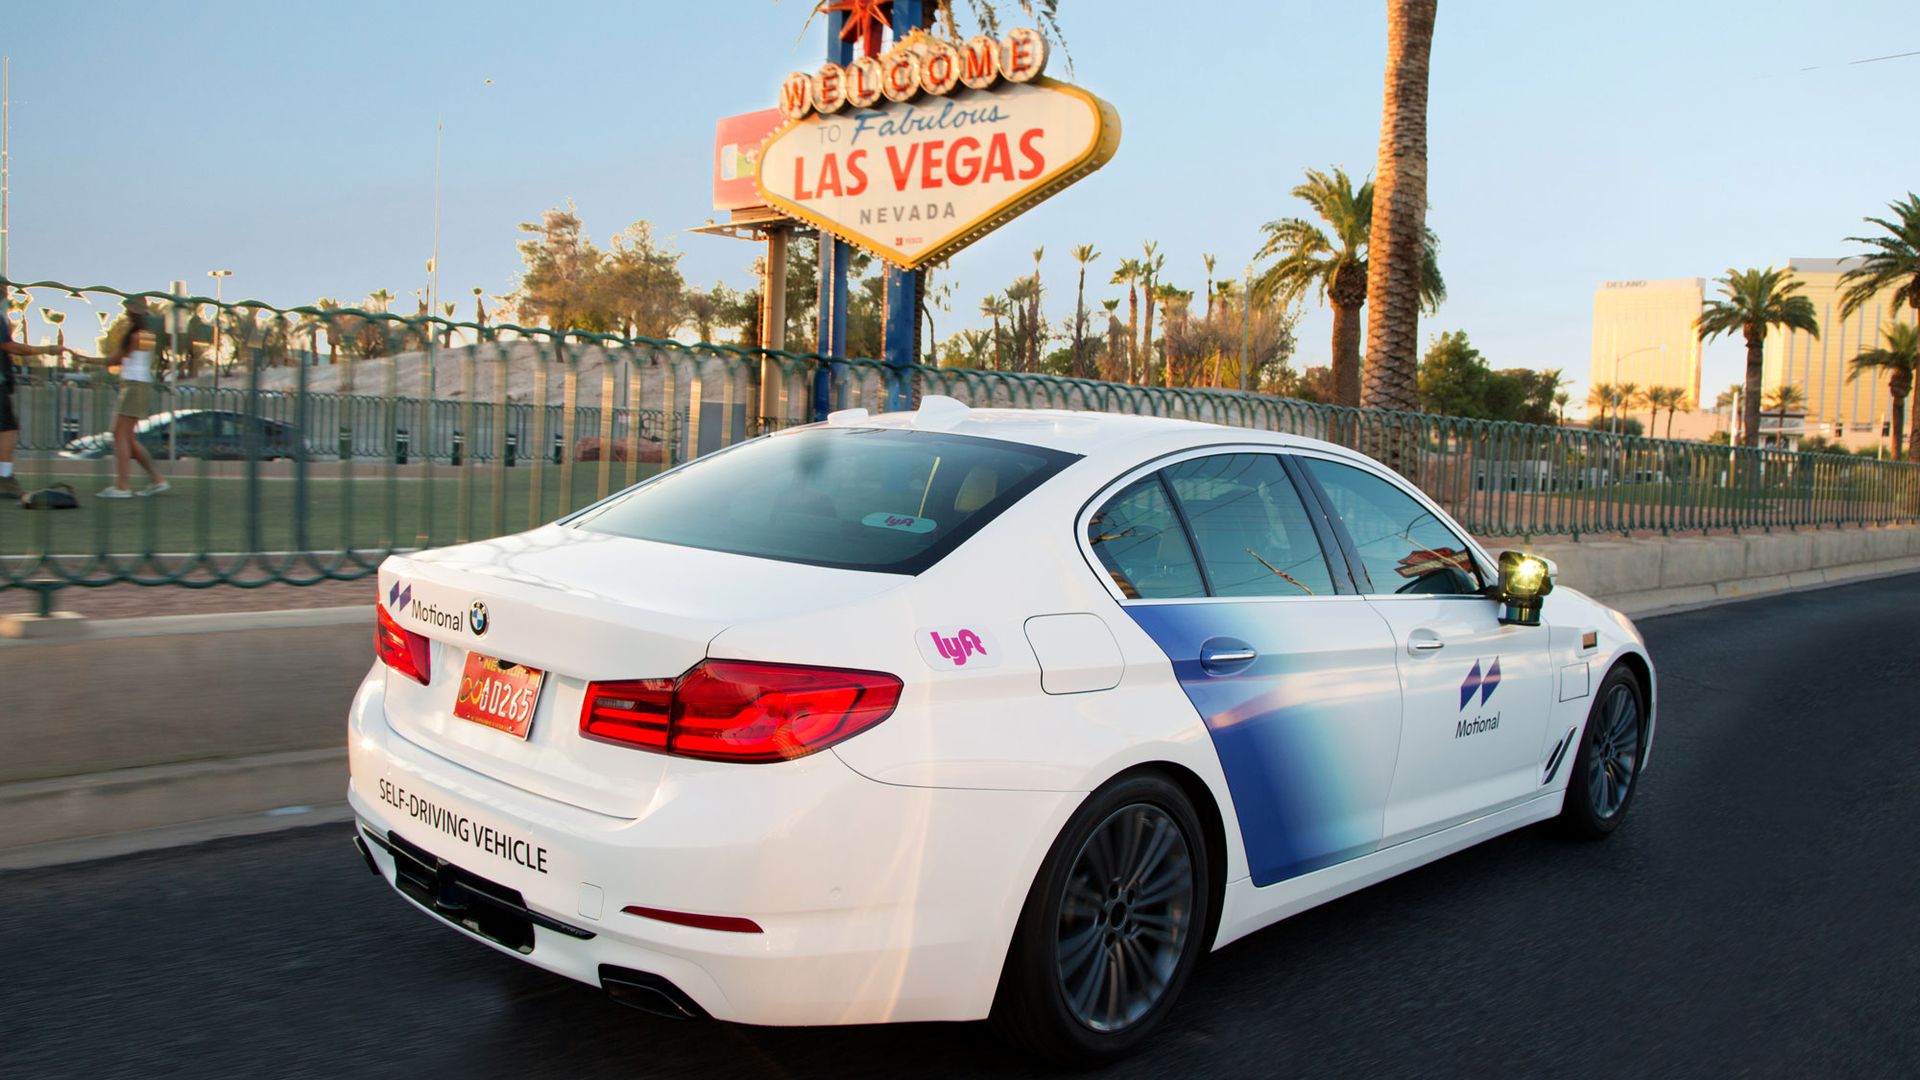 Image of a Motional self-driving car in Las Vegas